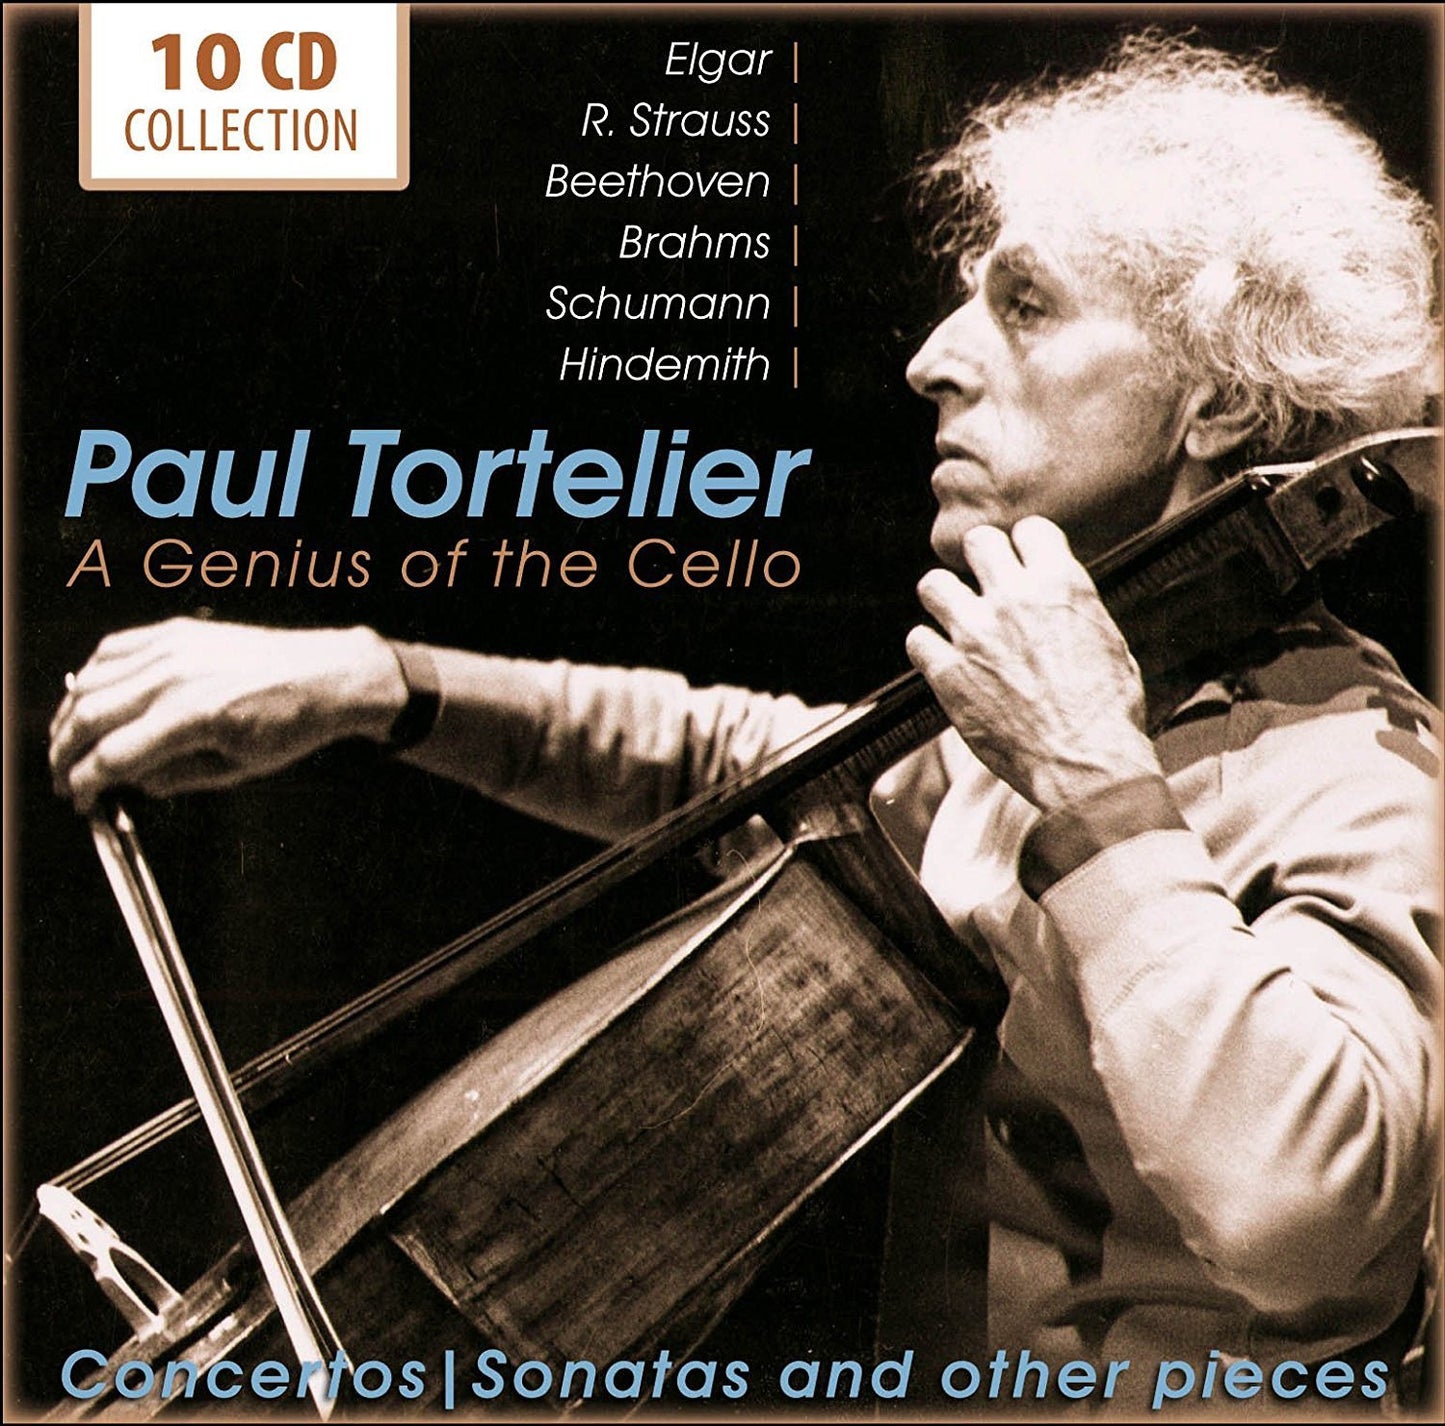 PAUL TORTELIER: GENIUS OF THE CELLO (10 CDS)